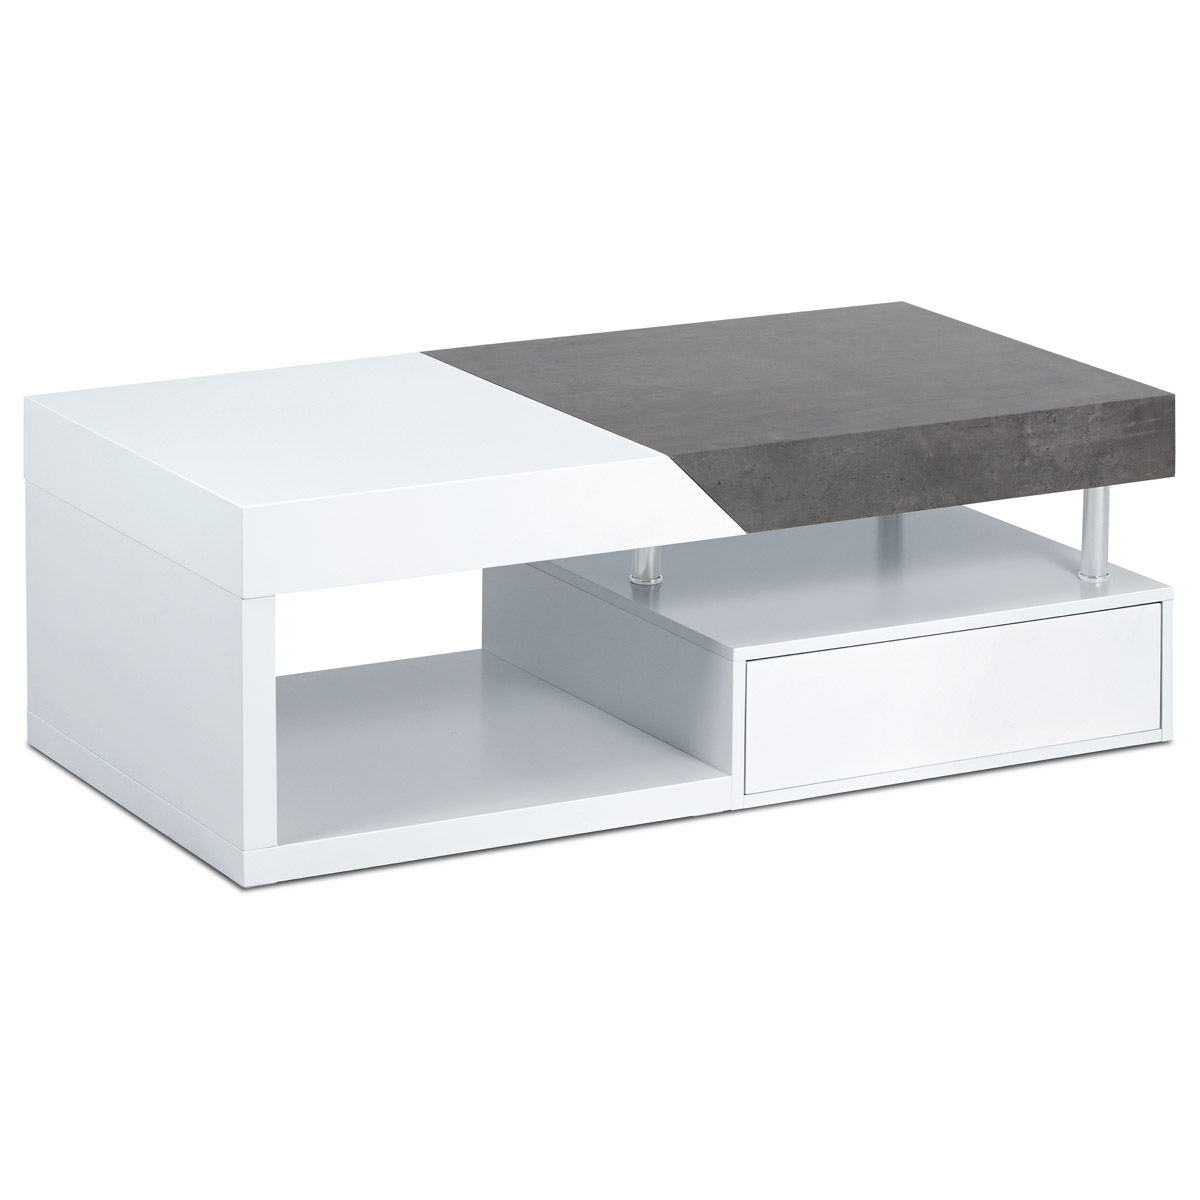 Coffee table(2 drawers),E1 MDF PU matt,Others concrete paper veneer-AHG-622 WT